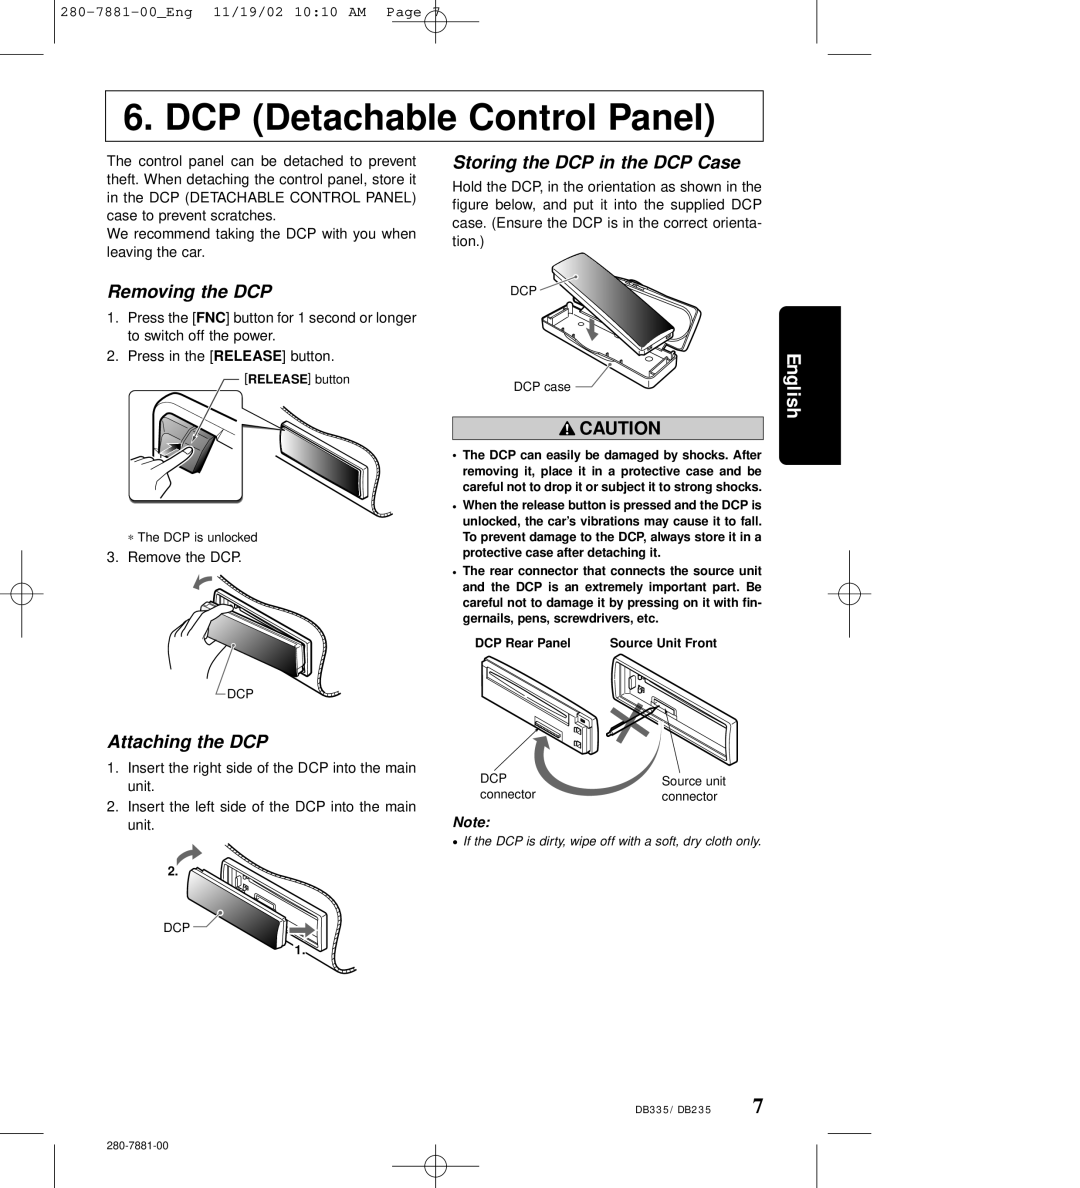 Clarion DB235 DCP Detachable Control Panel, Removing the DCP, Attaching the DCP, Storing the DCP in the DCP Case, English 